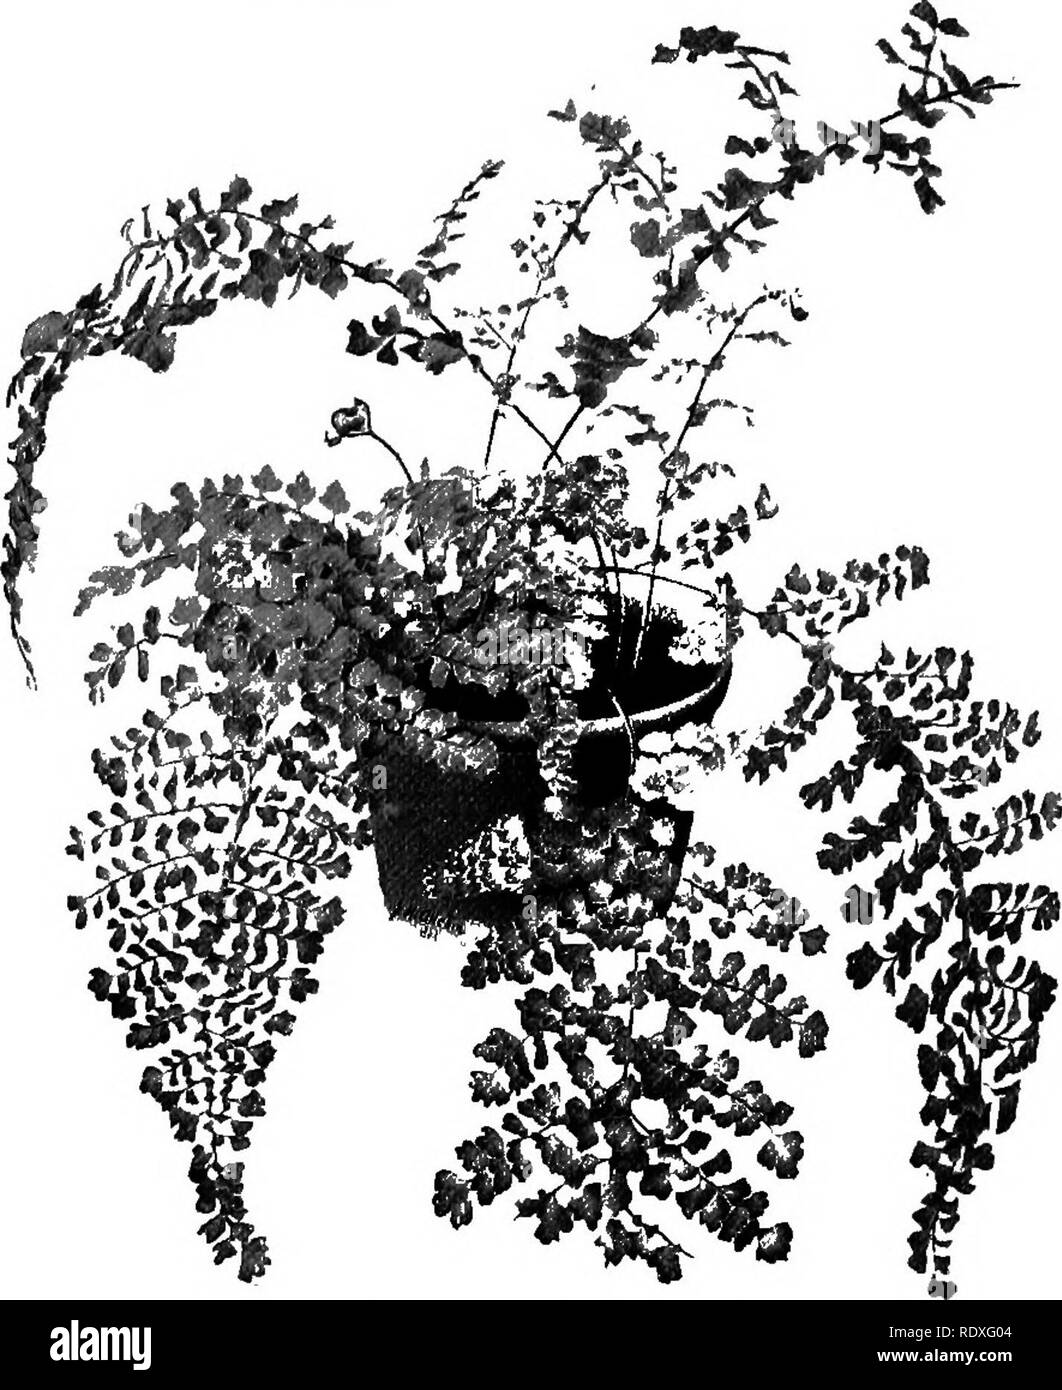 . The Book of gardening; a handbook of horticulture. Gardening; Horticulture. 564 THE BOOK OF GARDENING. Viviparous and Proliferous Ferns. Adiantum caudatum.* Asplenium laxum pumilum. ciliatum.* dolabriforme.* lunulatum.*. longissimum.* monanthemum. obtusilobum. Asplenium reclina- tum.* Sandersoni.* tenellum. viviparum.* v..nobile.* Ceratopteris thalic- troides.* Cystopteris bulbifera. Fadyena prolifera (Fig. 345)- Gymnogramme schi- zophylla.* Hemionitis cordata.* palmata,* Hypolepis Bergiana. Lastrea cicutsefolia. prolifica. Nephrolepis, nearly all known sorts. Phegopteris divergens. Platycer Stock Photo